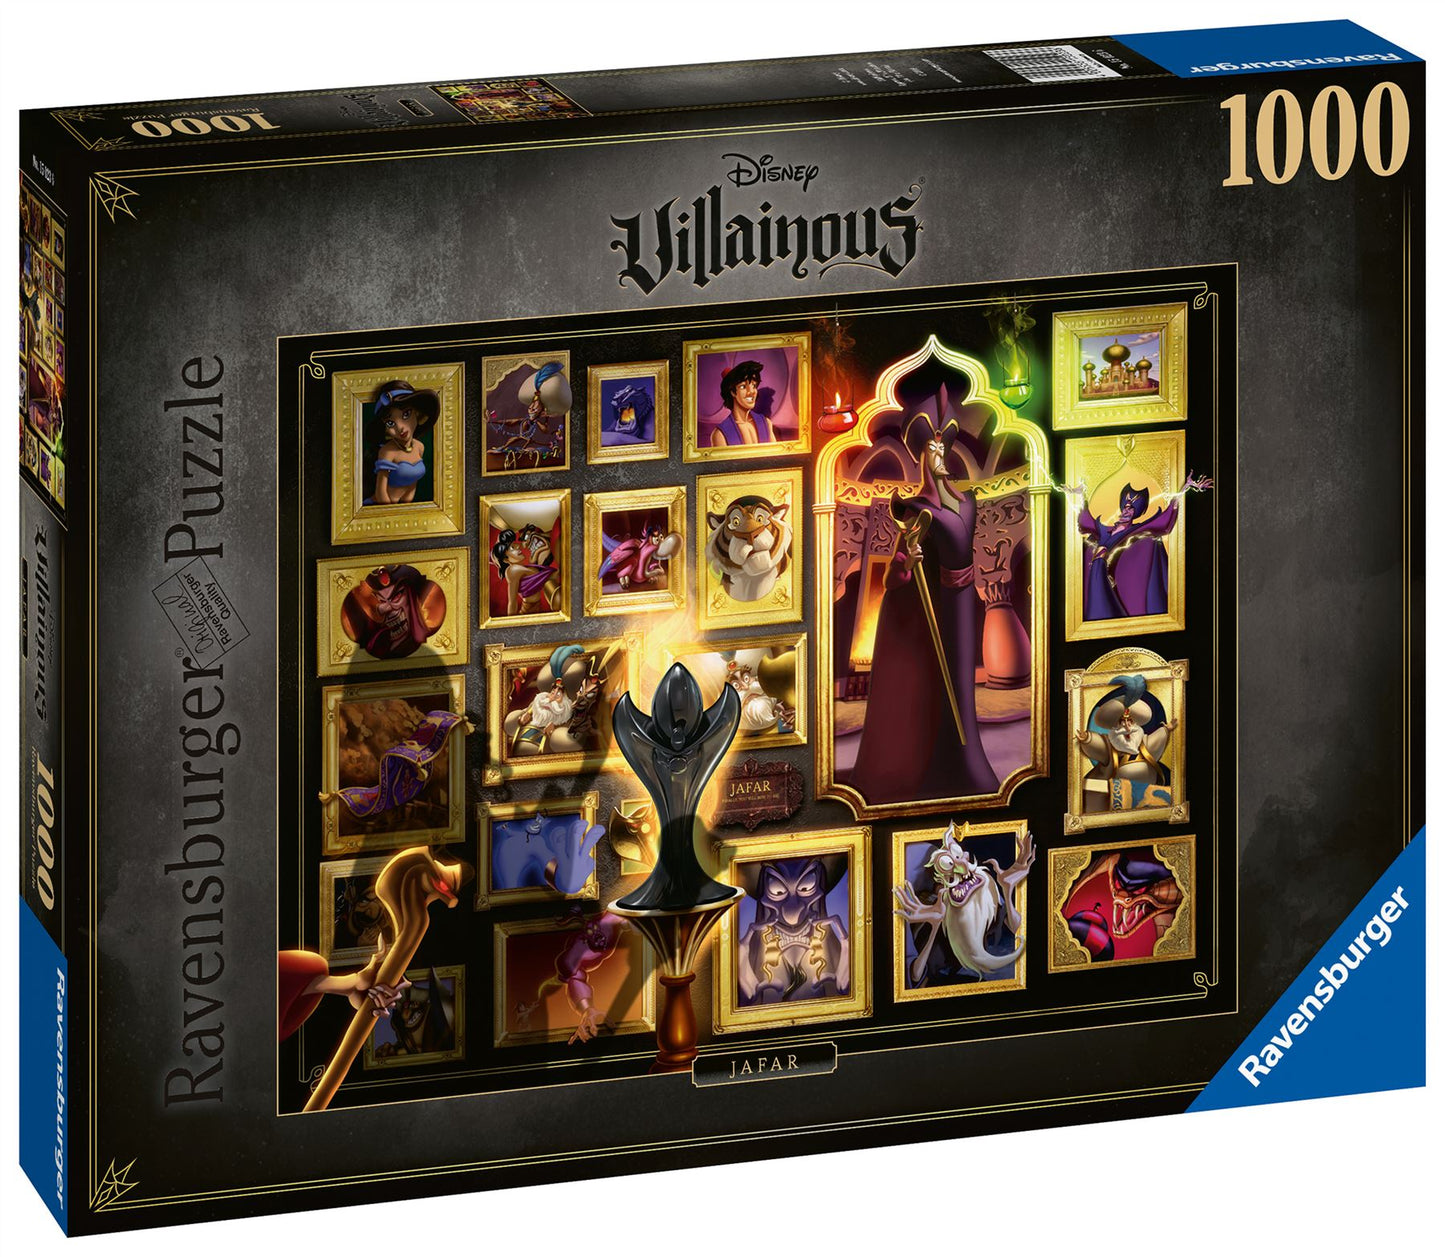 Villainous Jafar 1000 Piece Jigsaw Puzzle